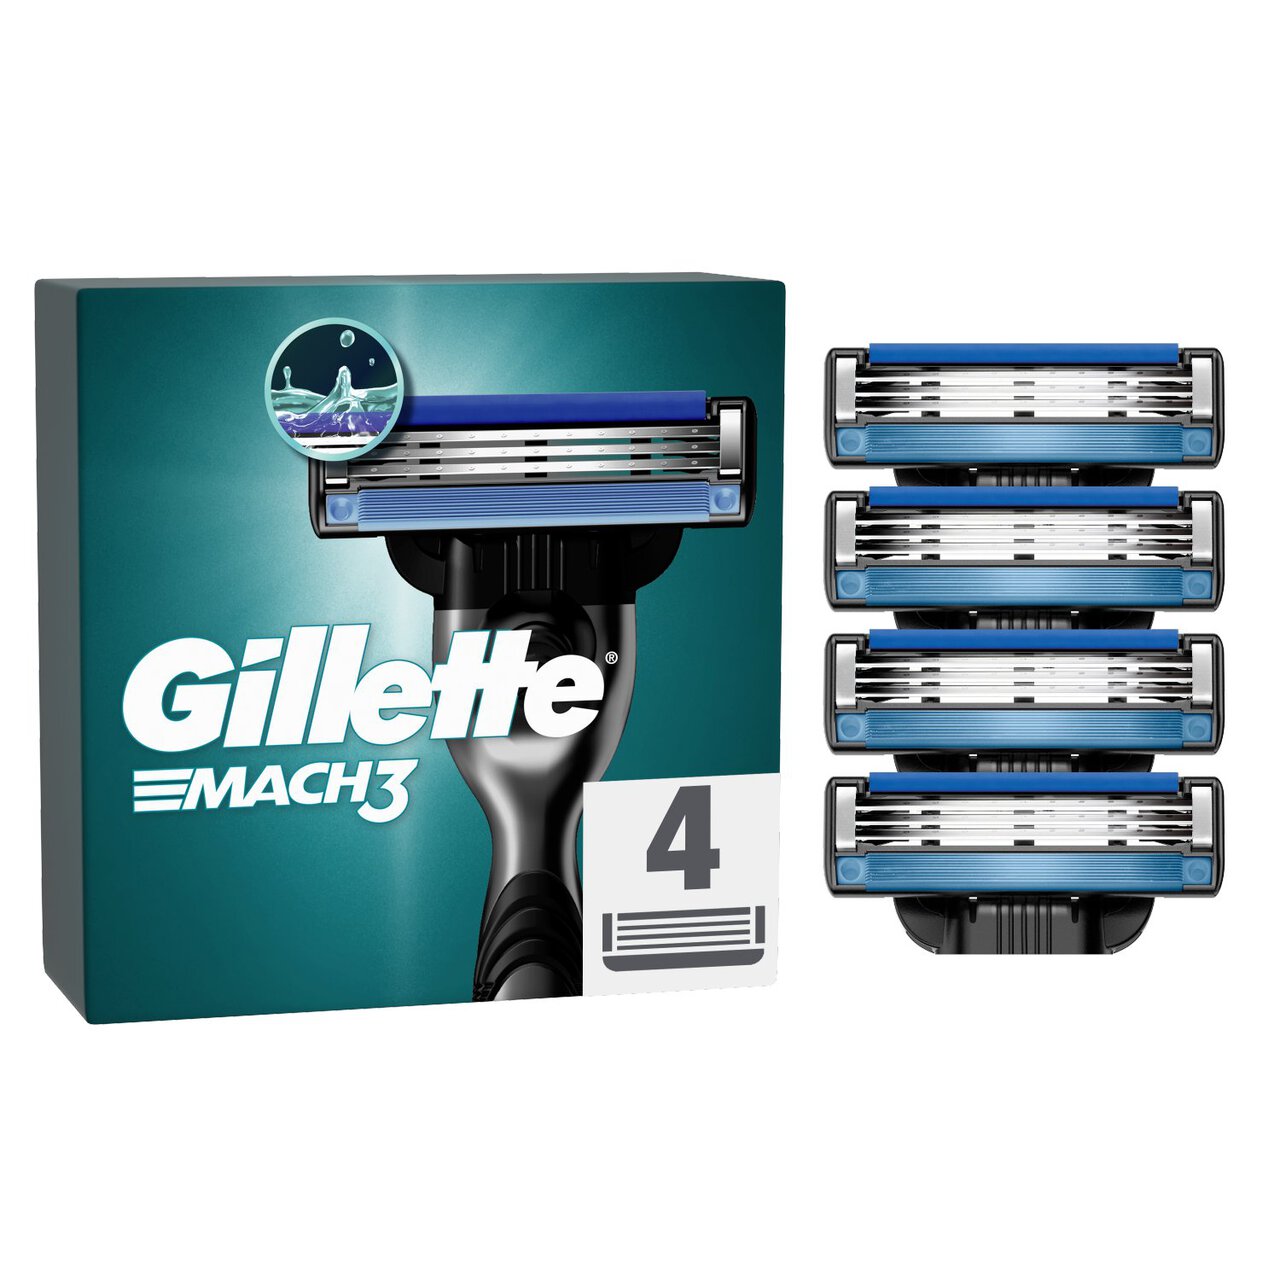 Gillette Mach 3 Razor Blades 4 per pack